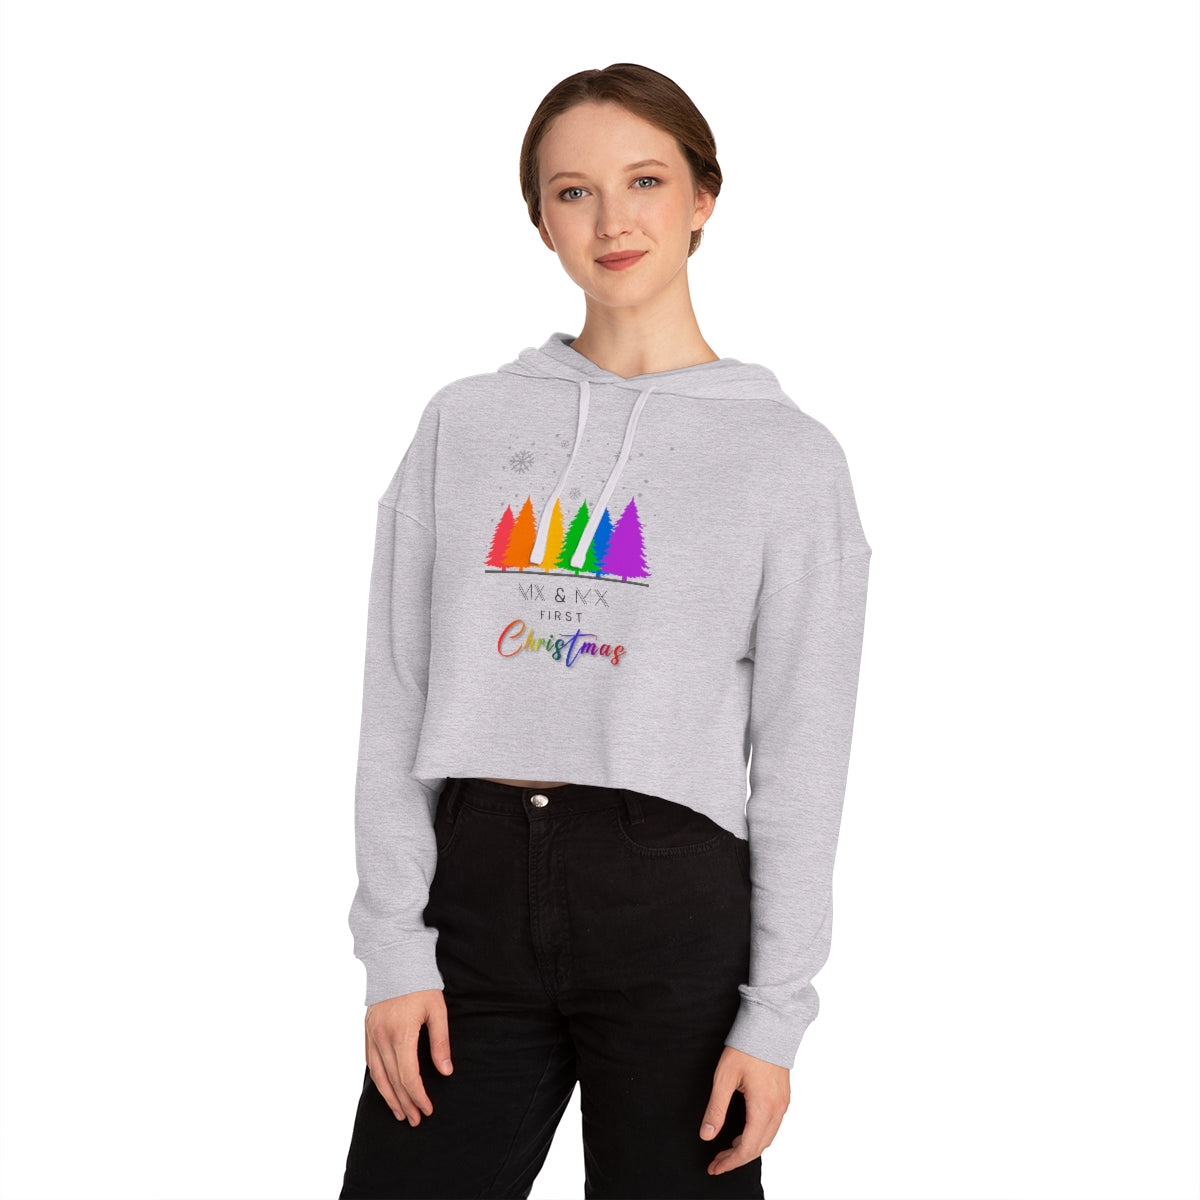 Christmas LGBTQ Women’s Cropped Hooded Sweatshirt - Mx & Mx First Christmas Printify